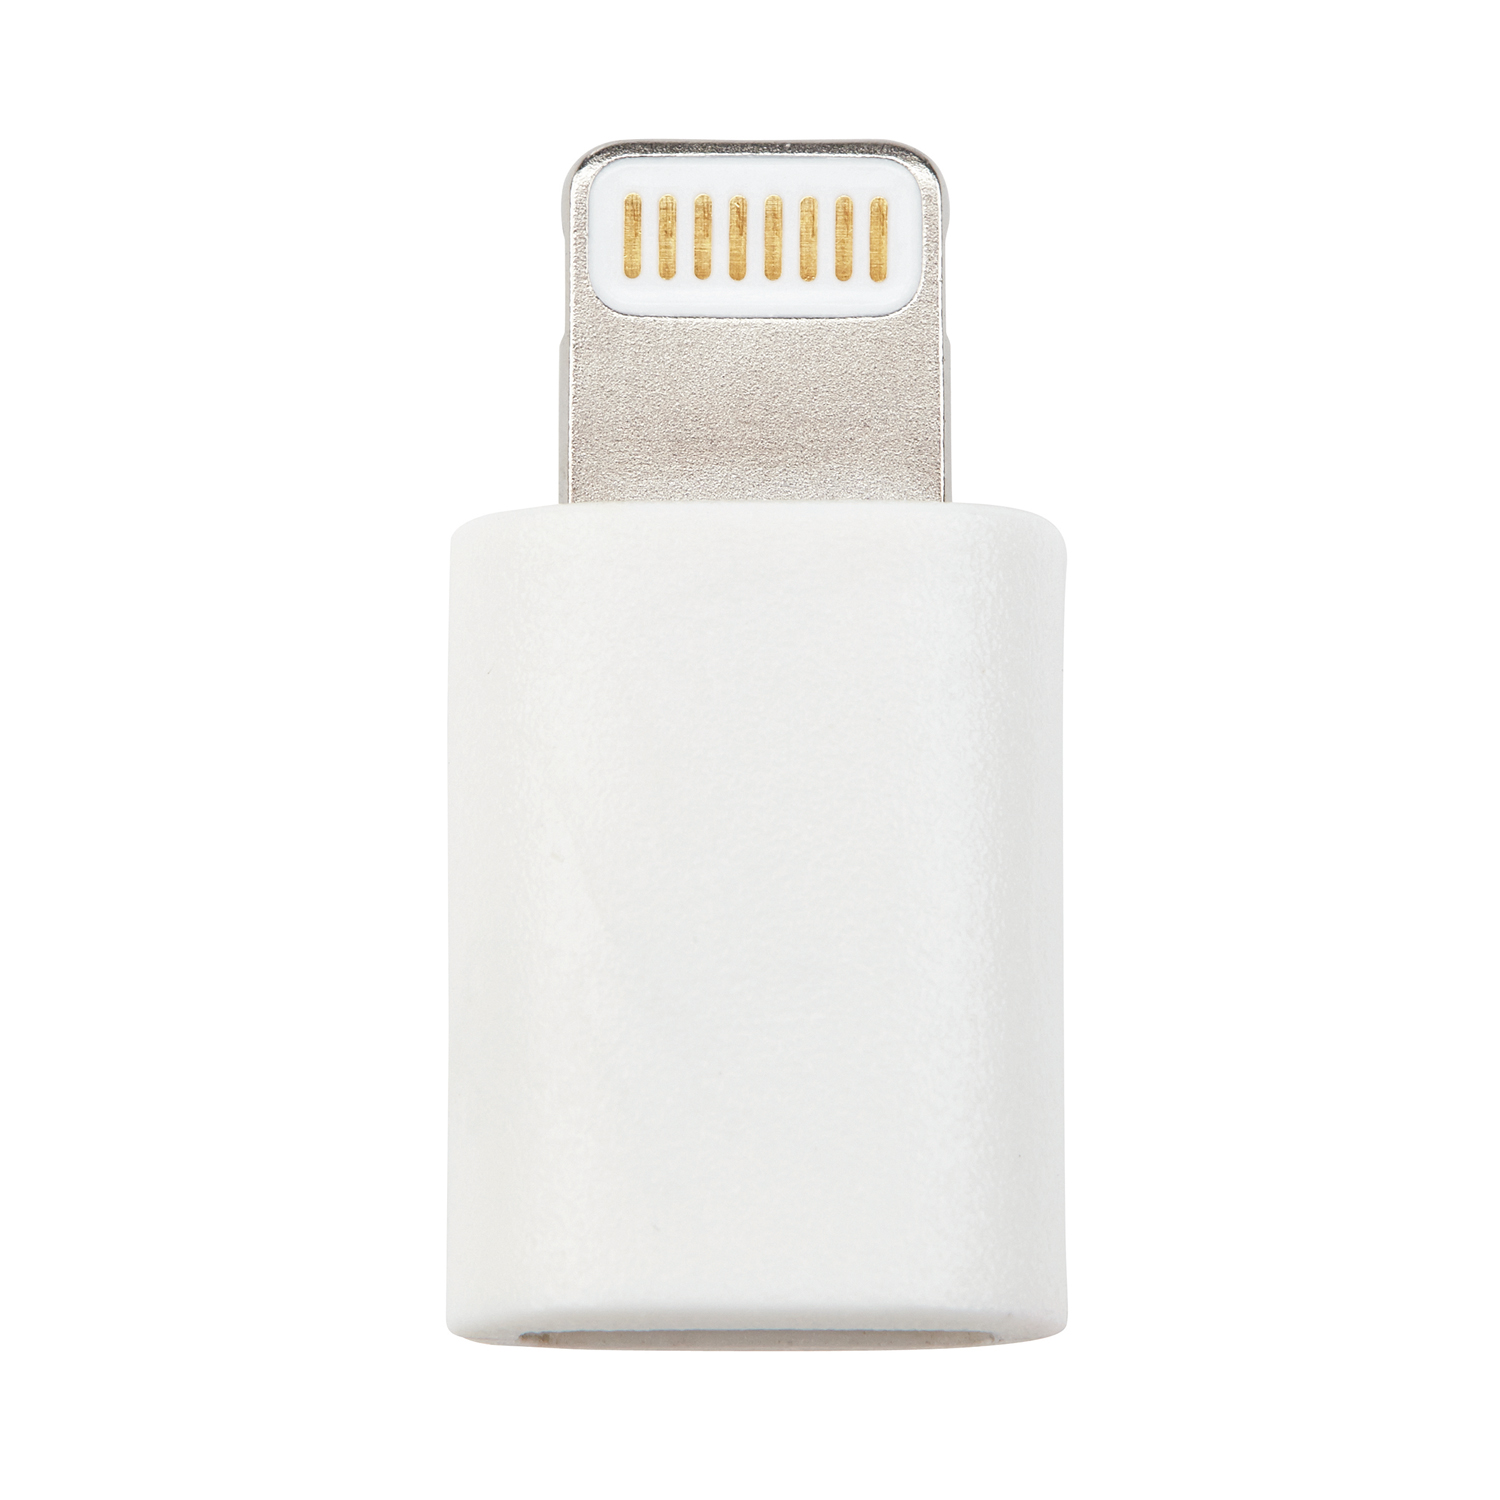 Переходник с разъема micro-USB на Apple Lightning